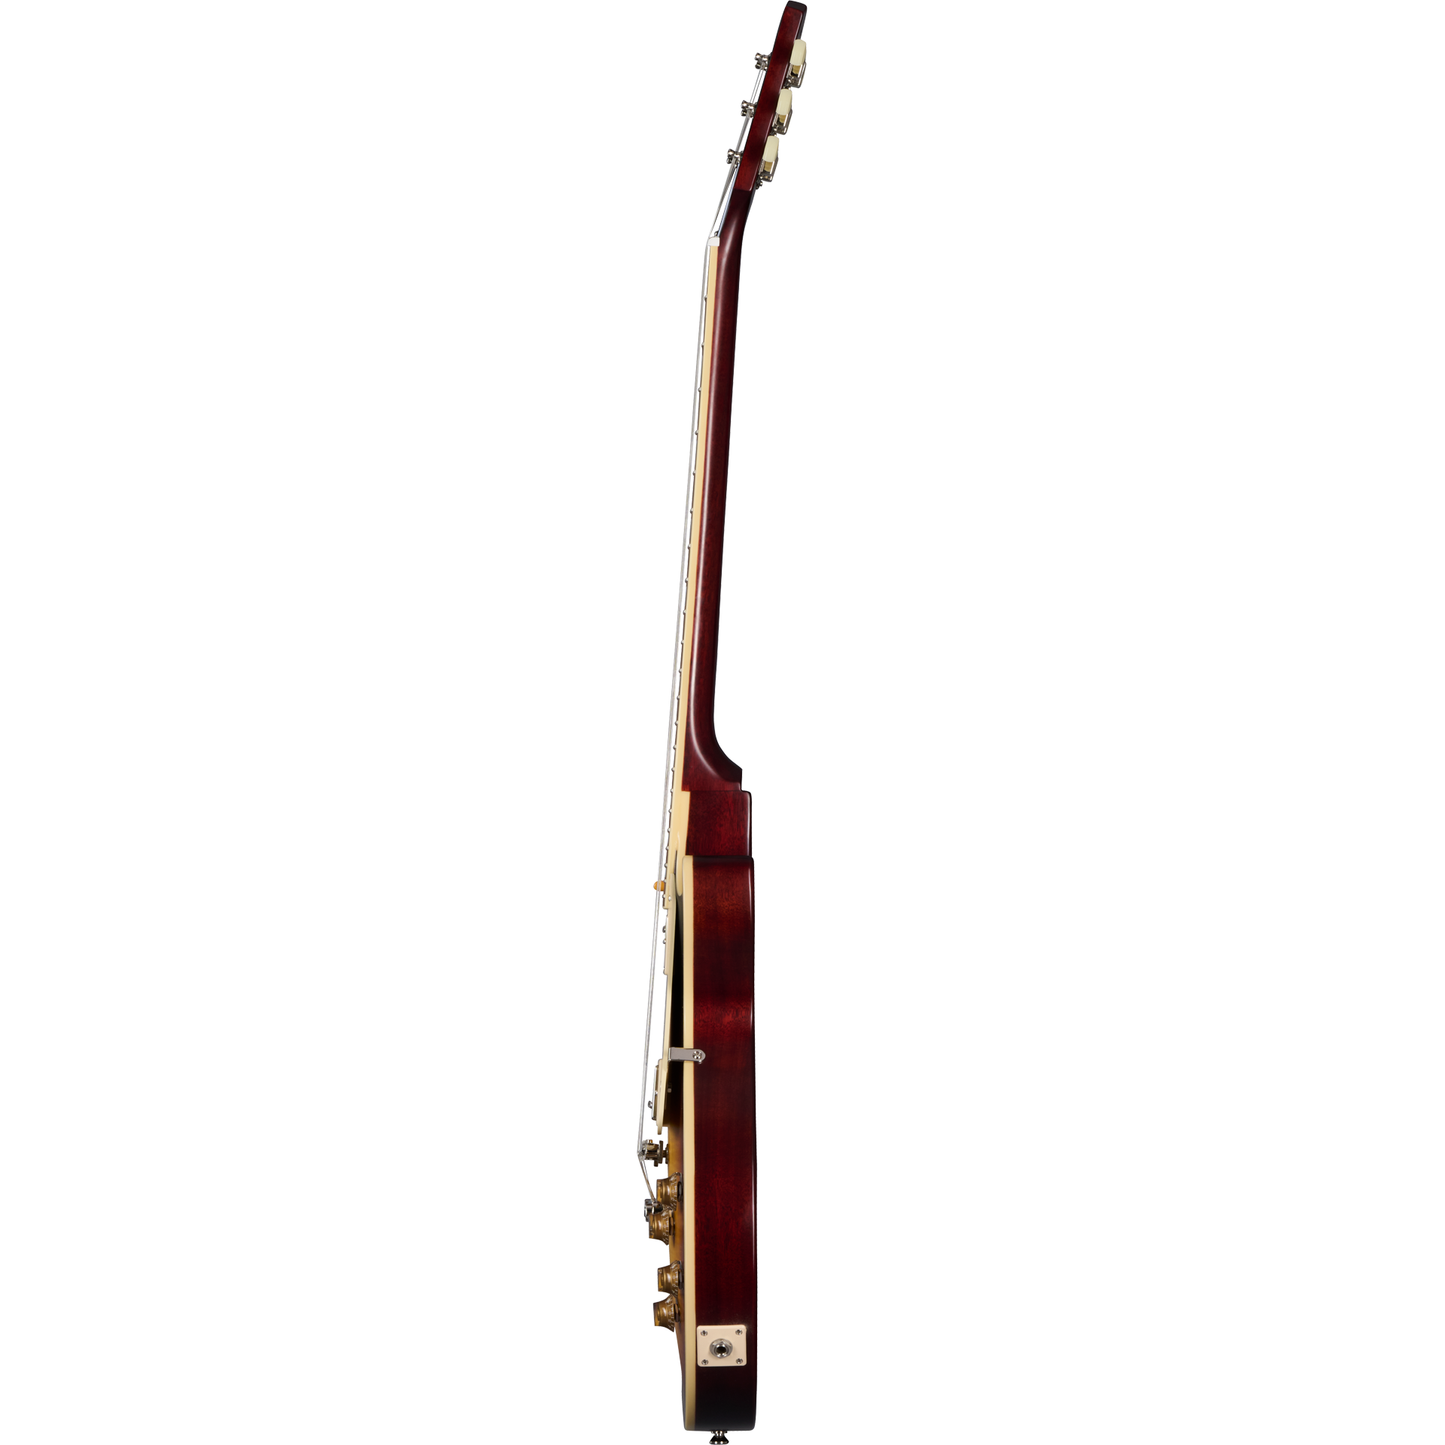 Epiphone 1959 Les Paul Standard Electric Guitar - Tobacco Burst